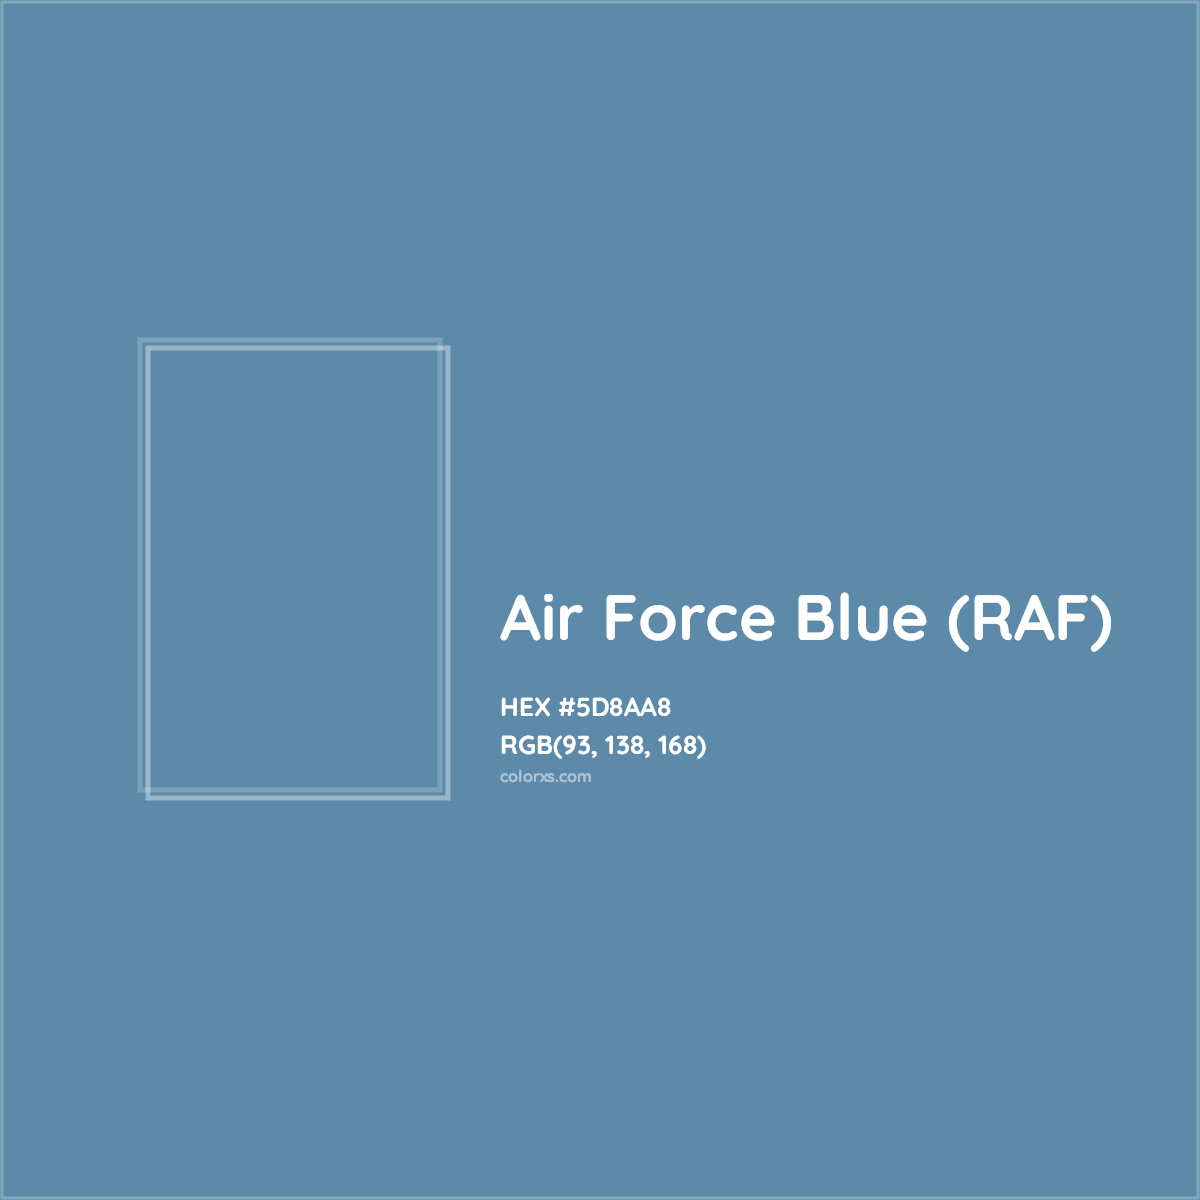 HEX #5D8AA8 Air Force Blue (RAF) Color - Color Code